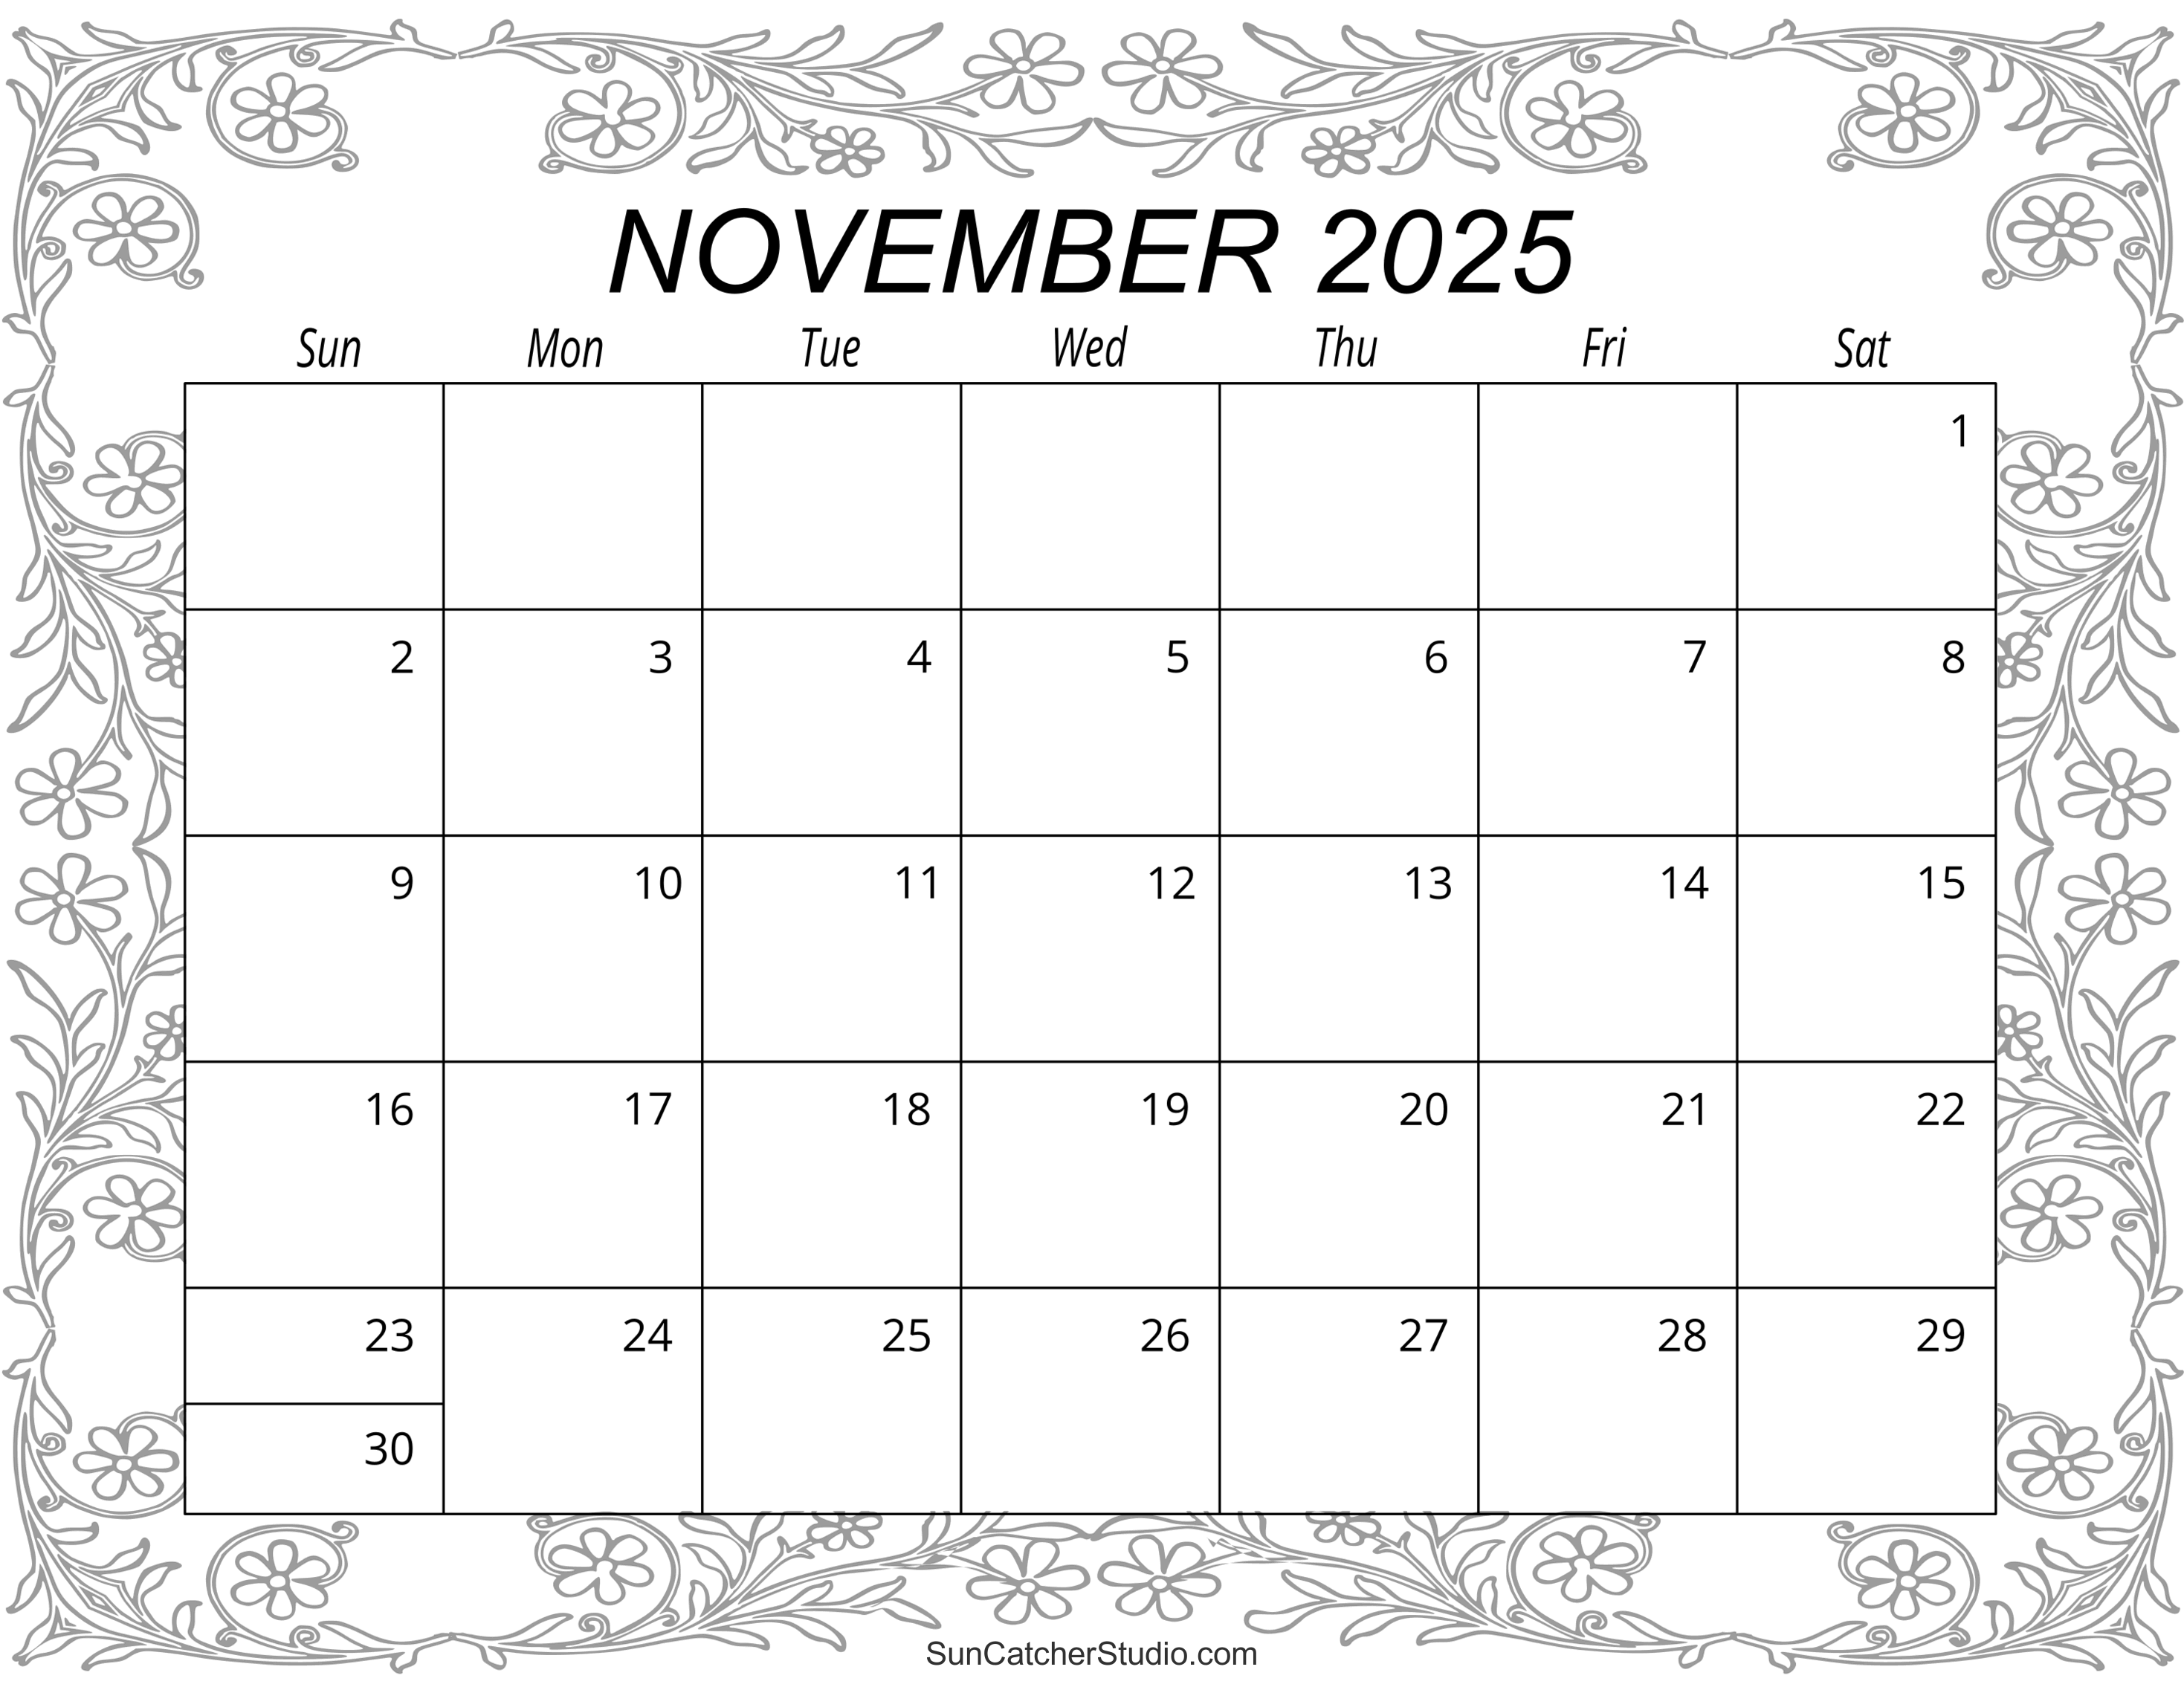 November calendar free printable â diy projects patterns monograms designs templates